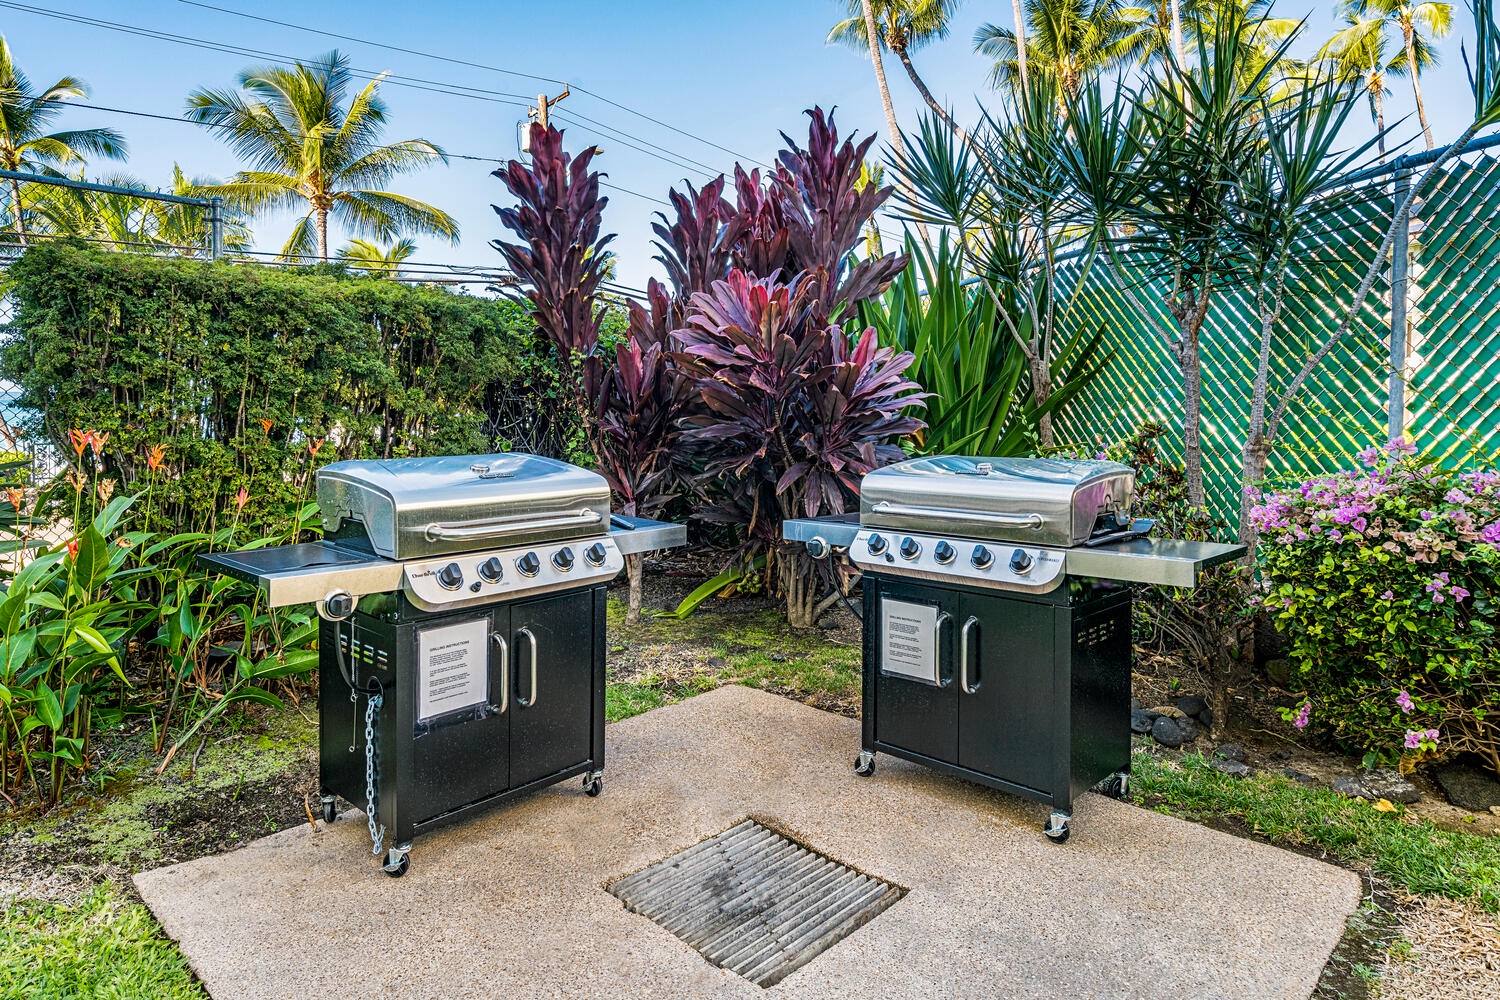 Kailua Kona Vacation Rentals, Kona Alii 403 - BBQ grills conveniently located near the pool.